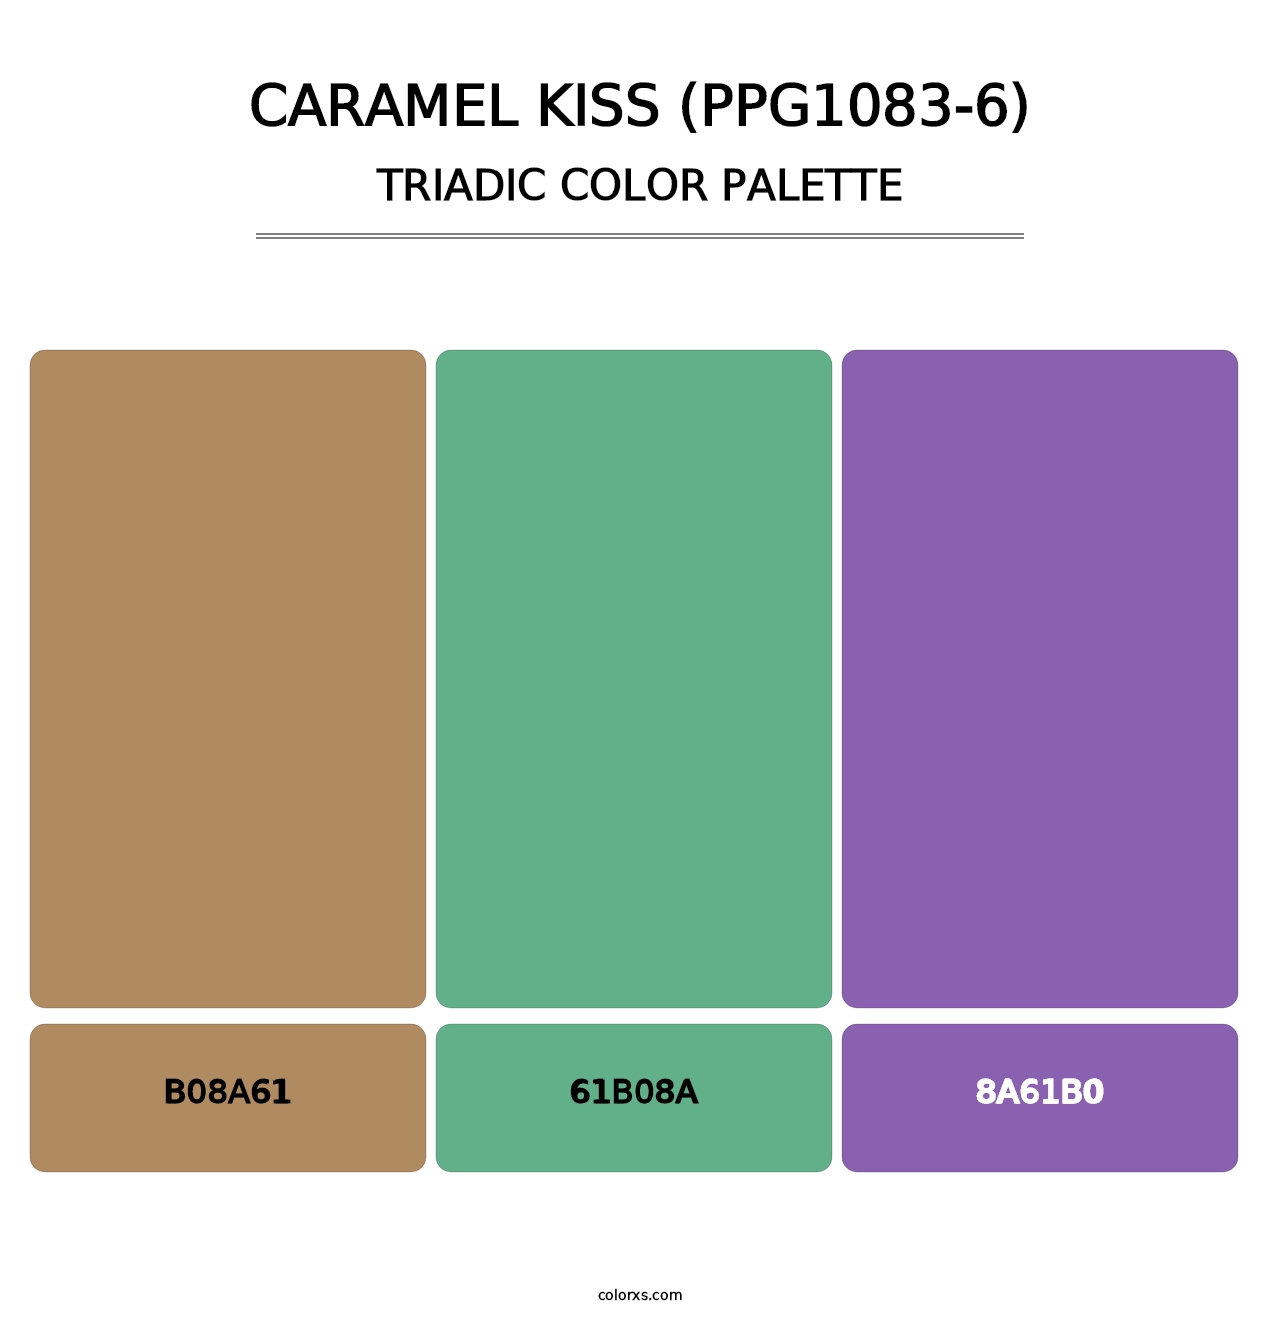 Caramel Kiss (PPG1083-6) - Triadic Color Palette